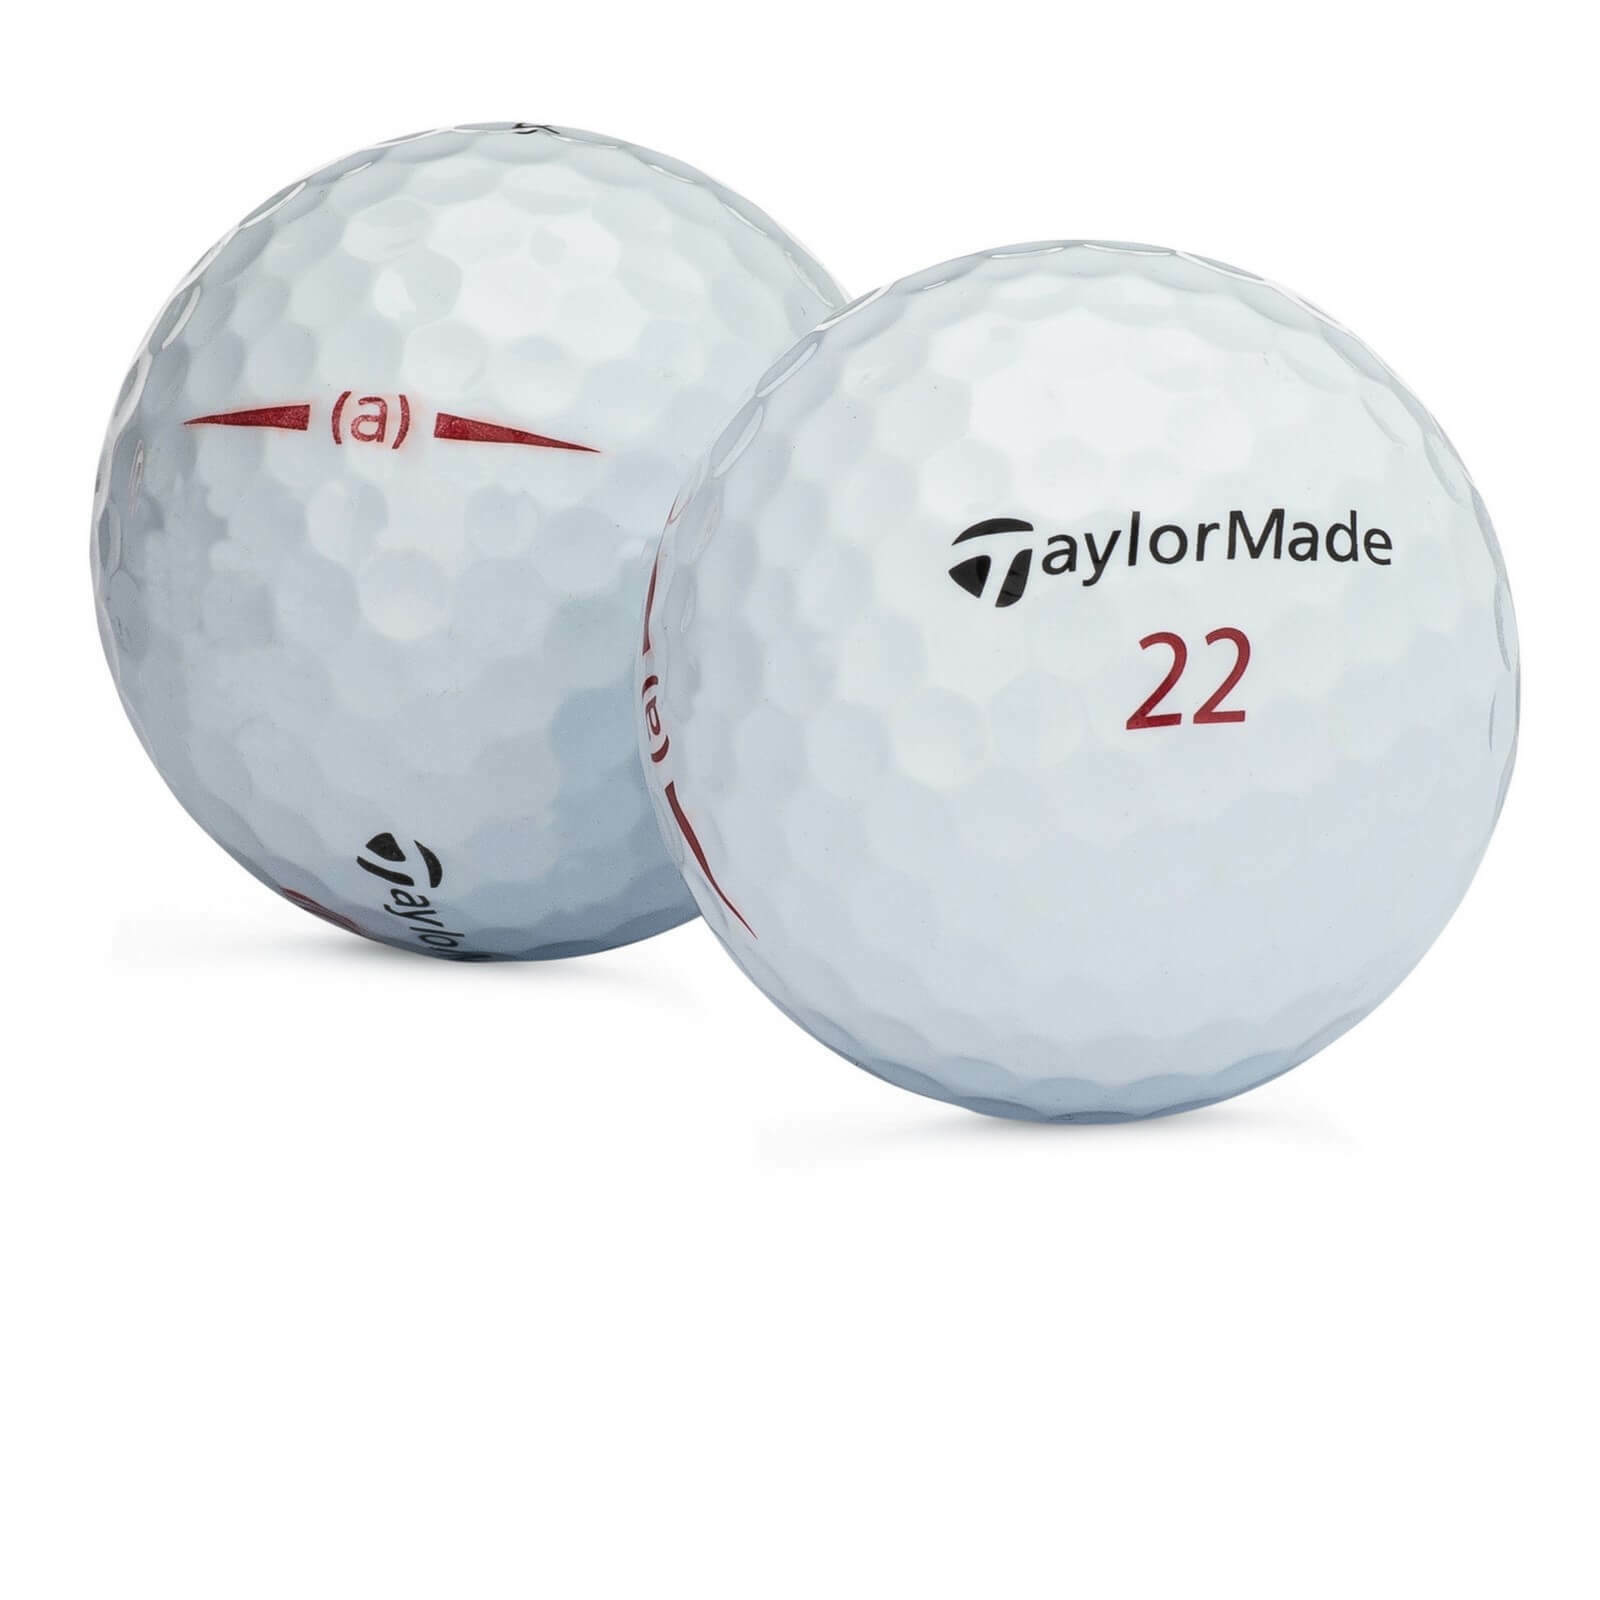 48 TaylorMade Project (a) 2018 Used Golf Balls / Near Mint AAAA / 